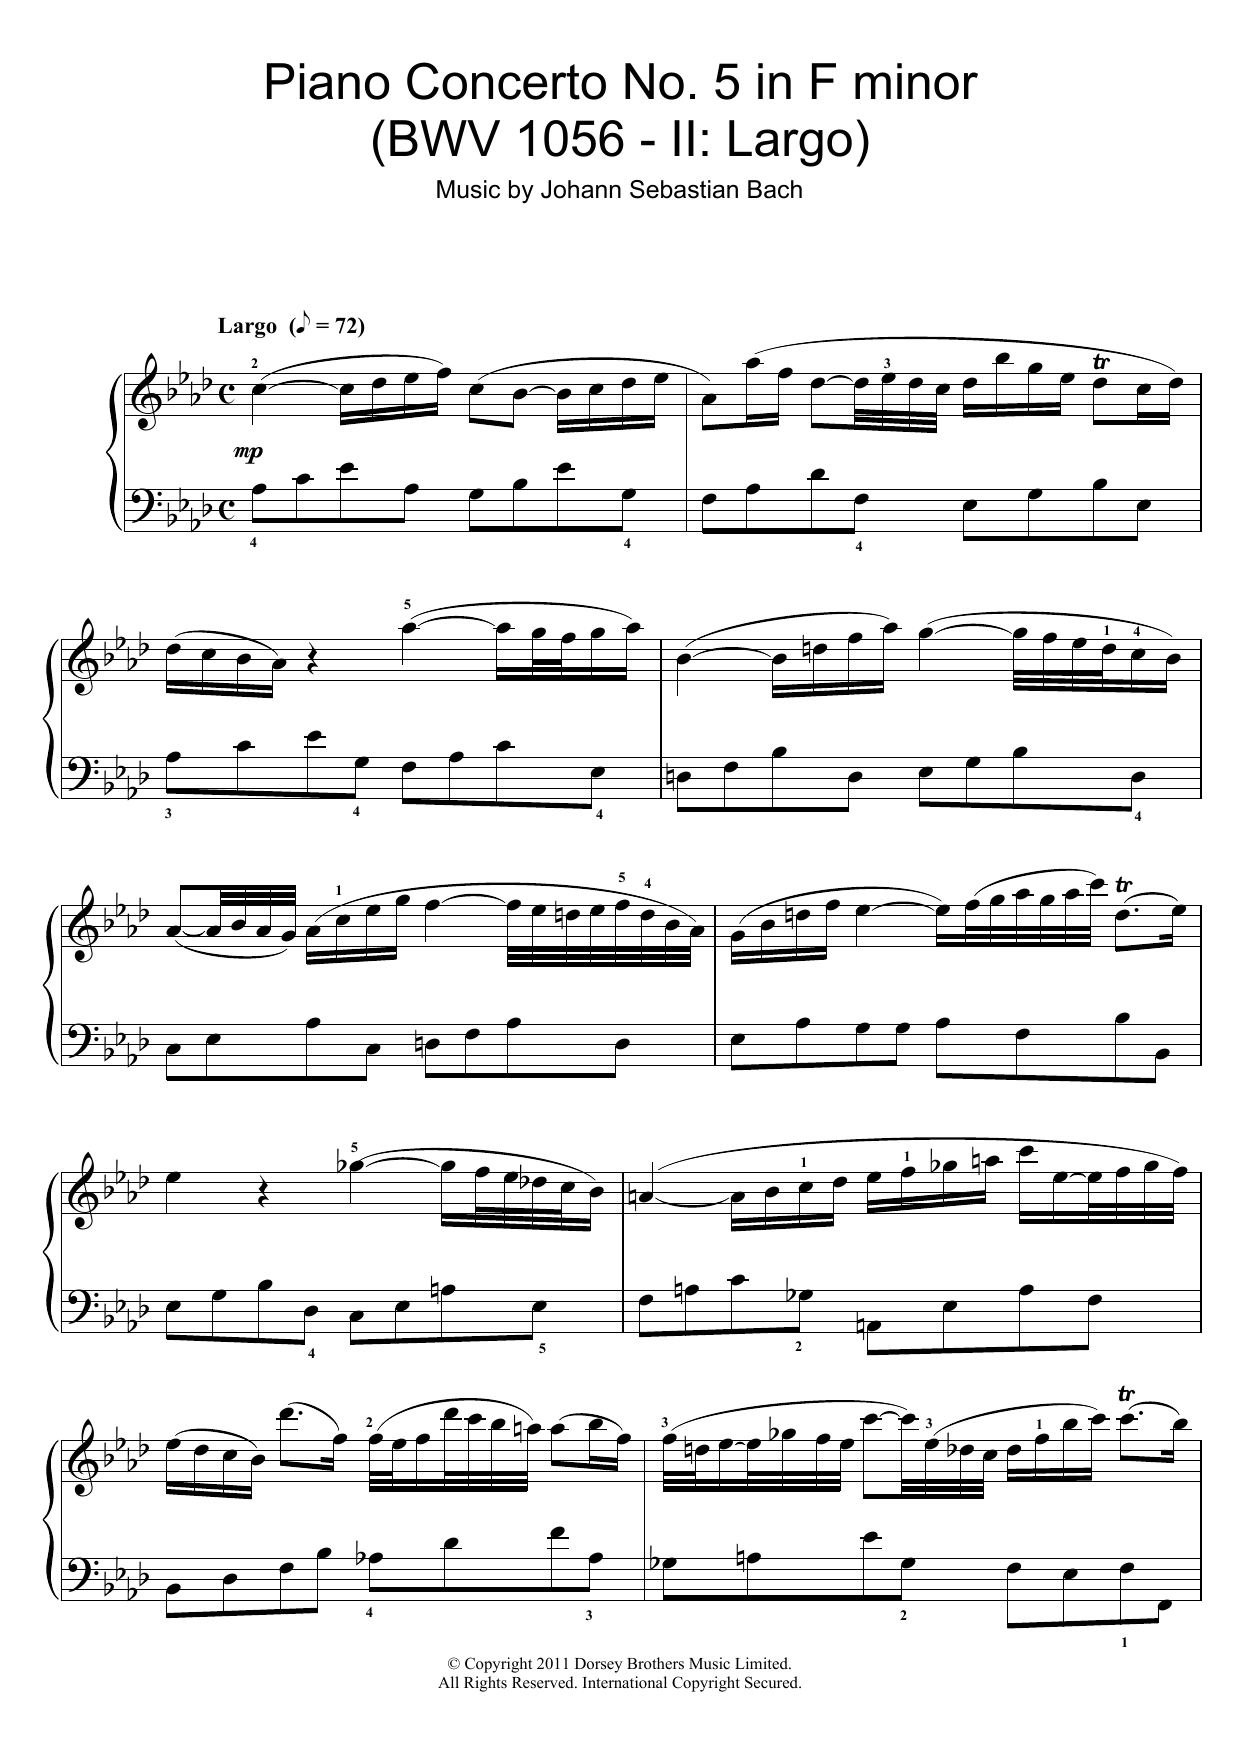 Johann Sebastian Bach Piano Concerto No. 5 in F minor (BWV 1056 - II: Largo) Sheet Music Notes & Chords for Piano - Download or Print PDF